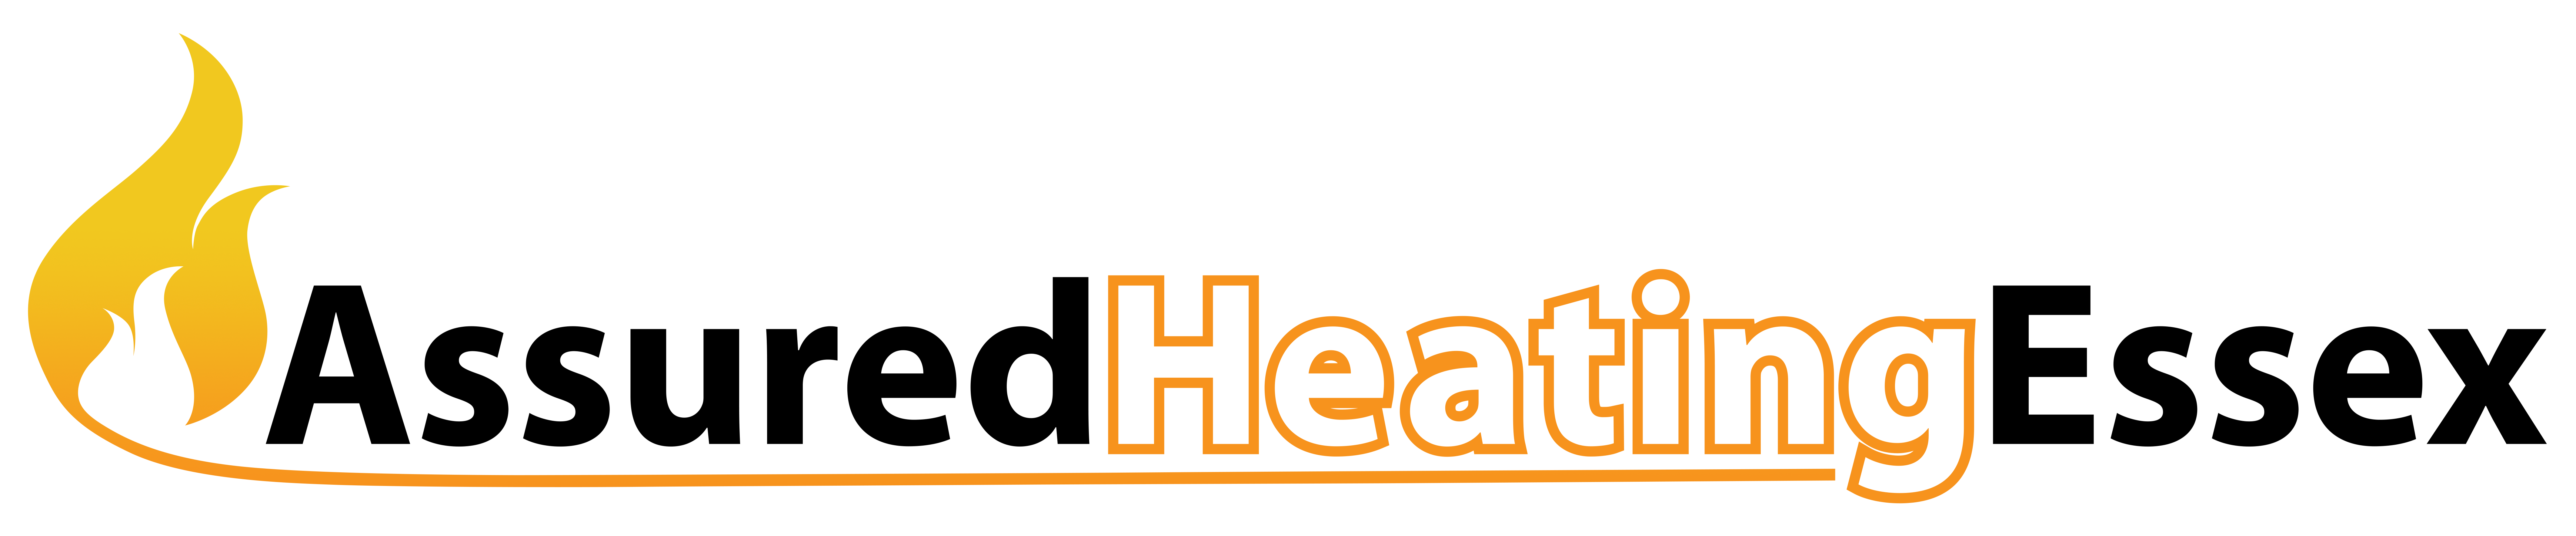 Assured-Heating-Logo_HIGH